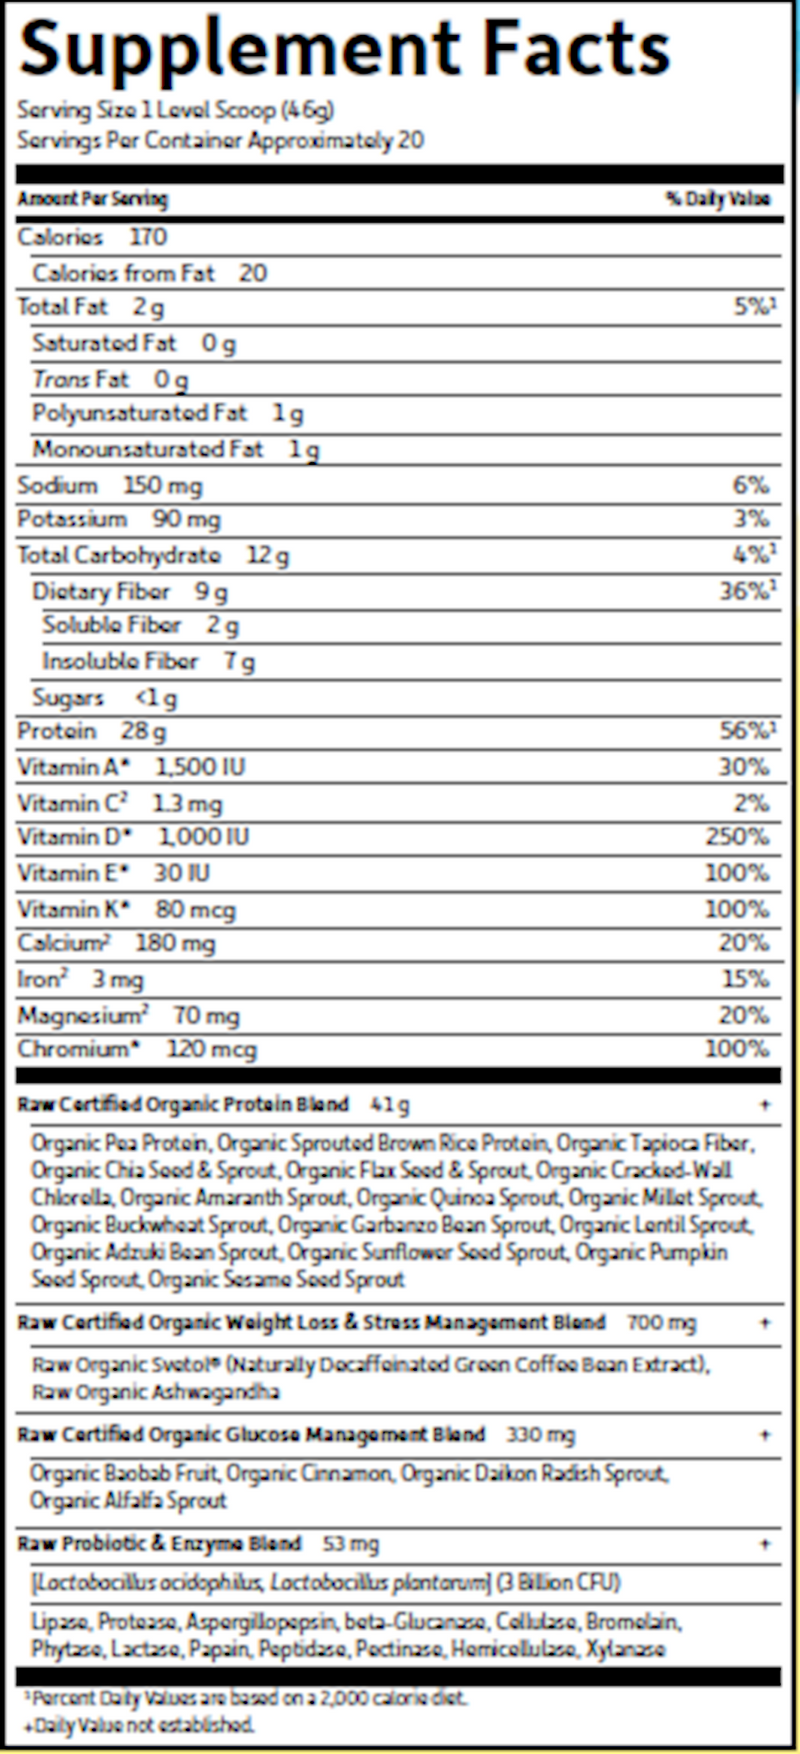 Raw Organic Fit Vanilla (Garden of Life) supplement facft